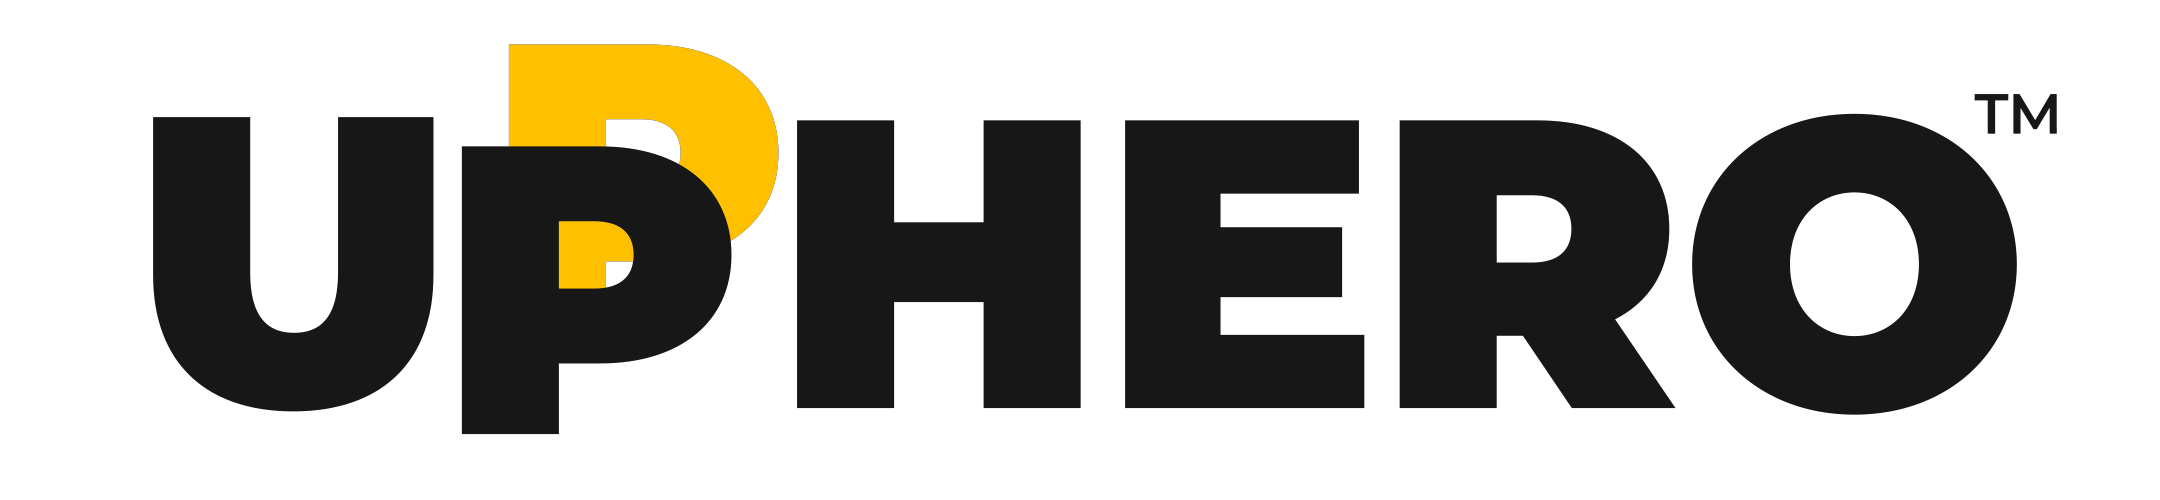 Upphero logo Black